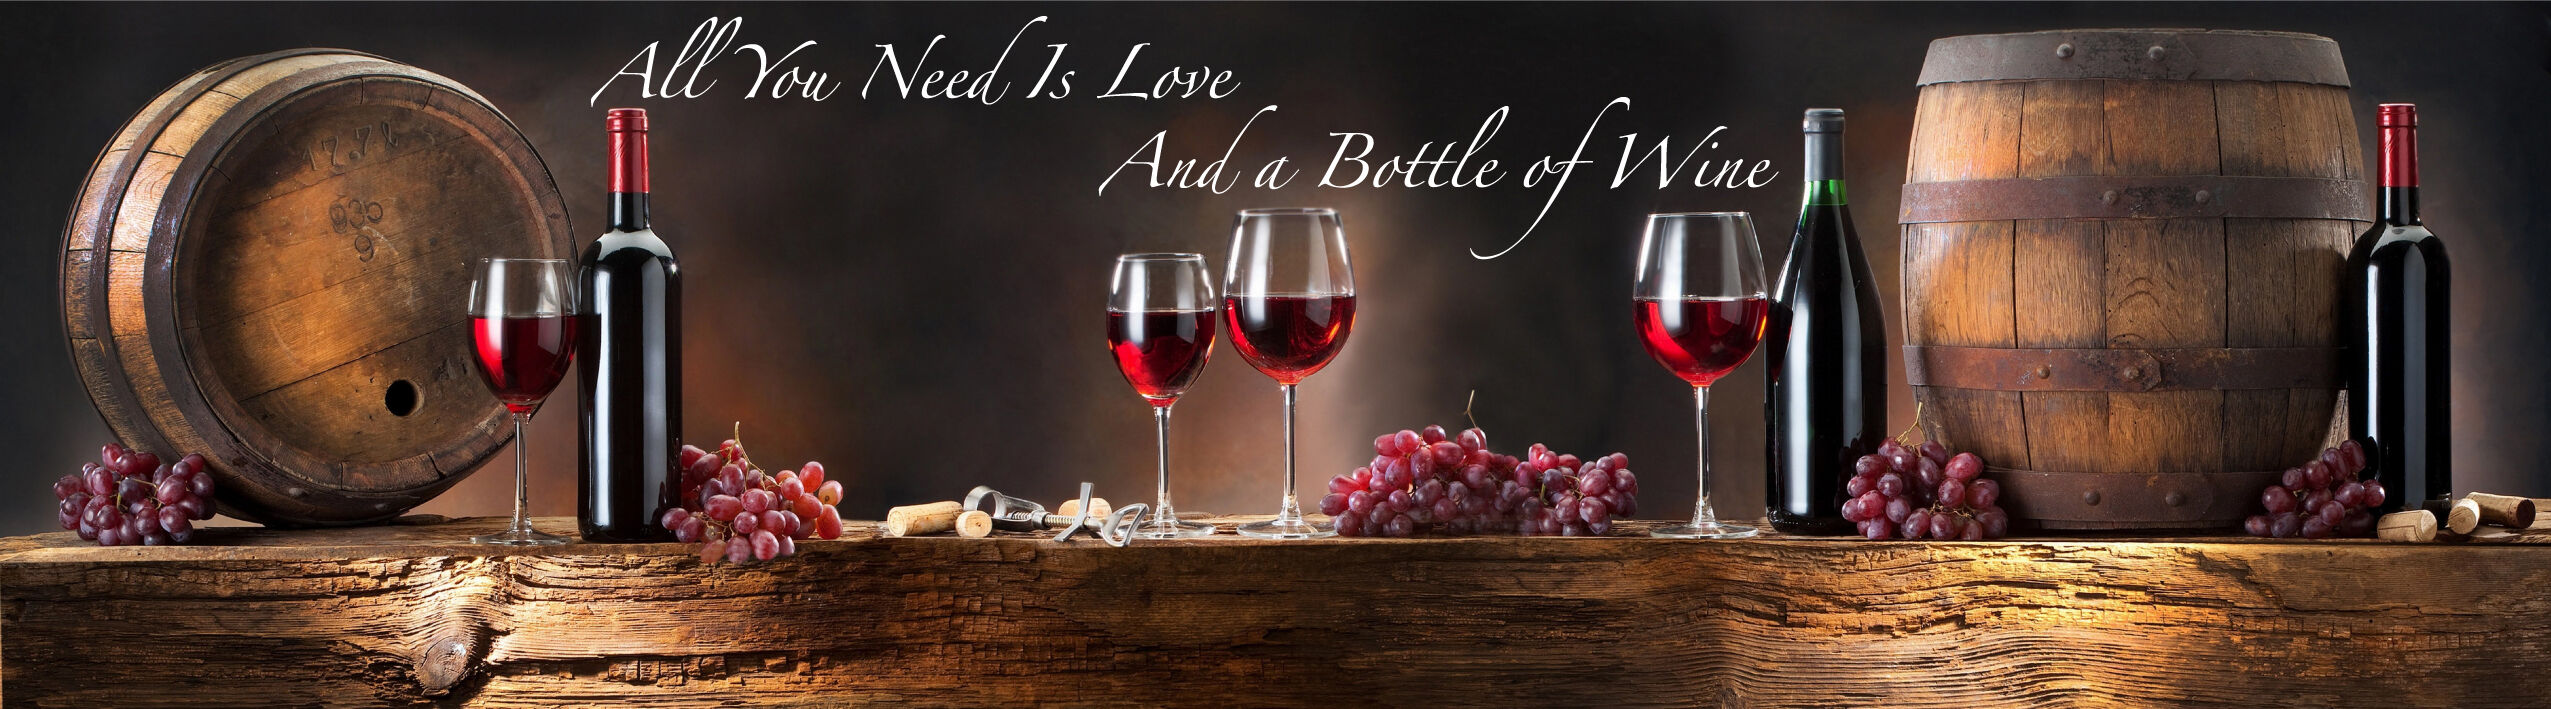 Love and wine 